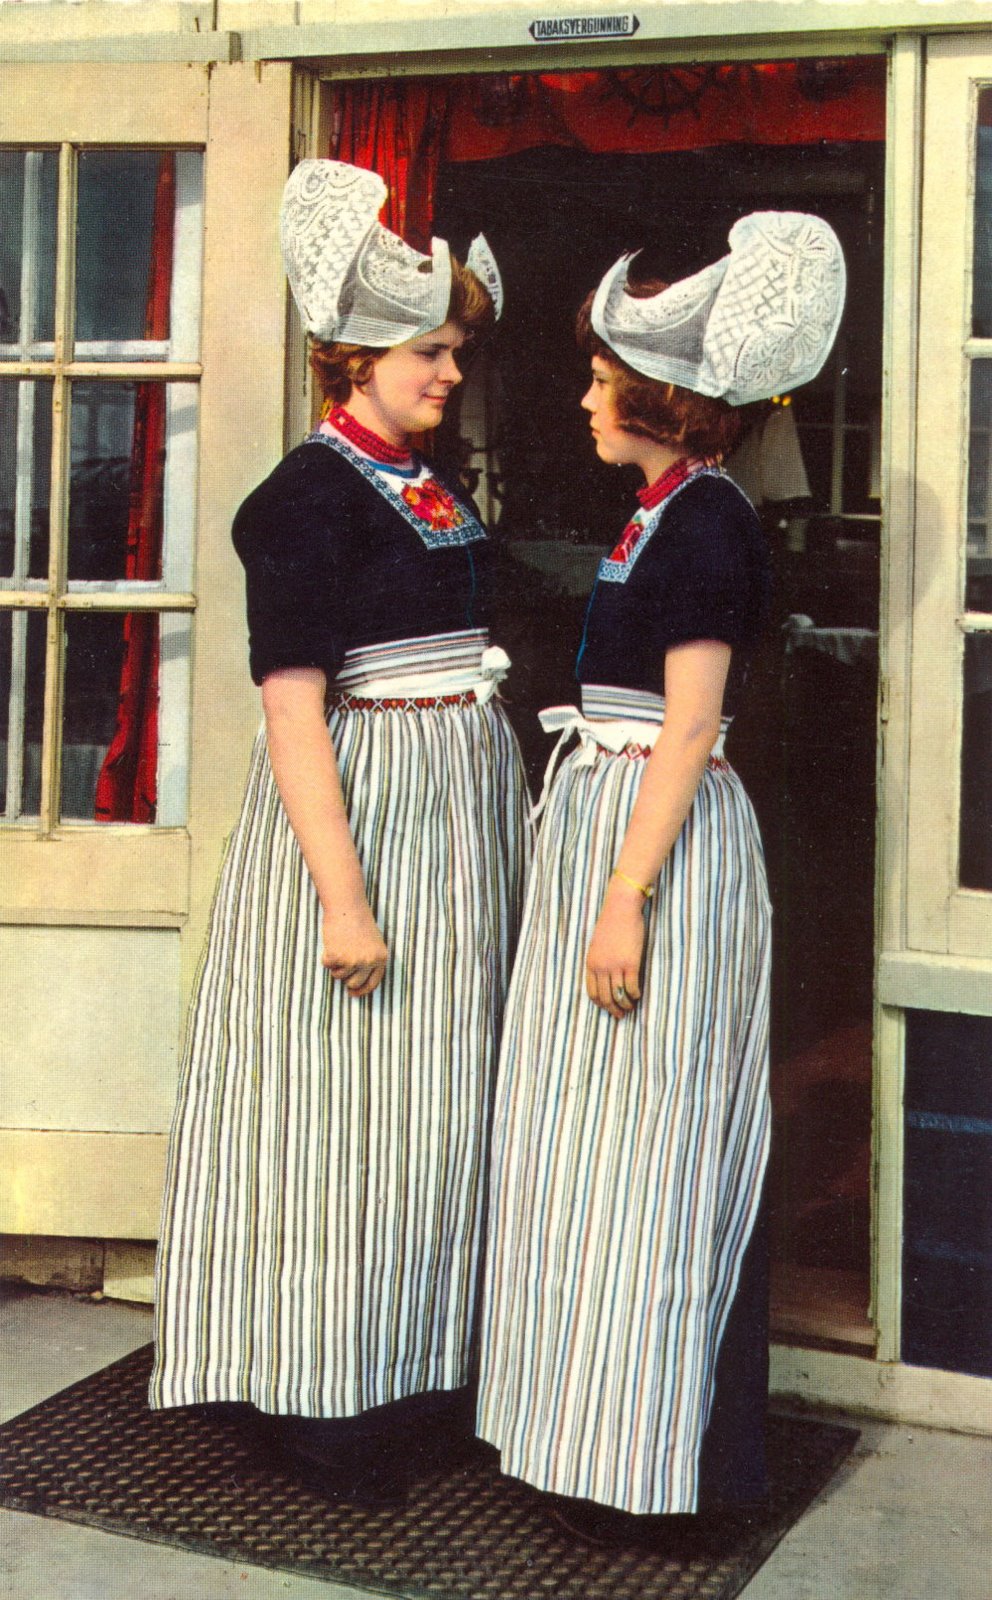 FolkCostume&Embroidery: Costume of Volendam, North Holland, The Netherlands